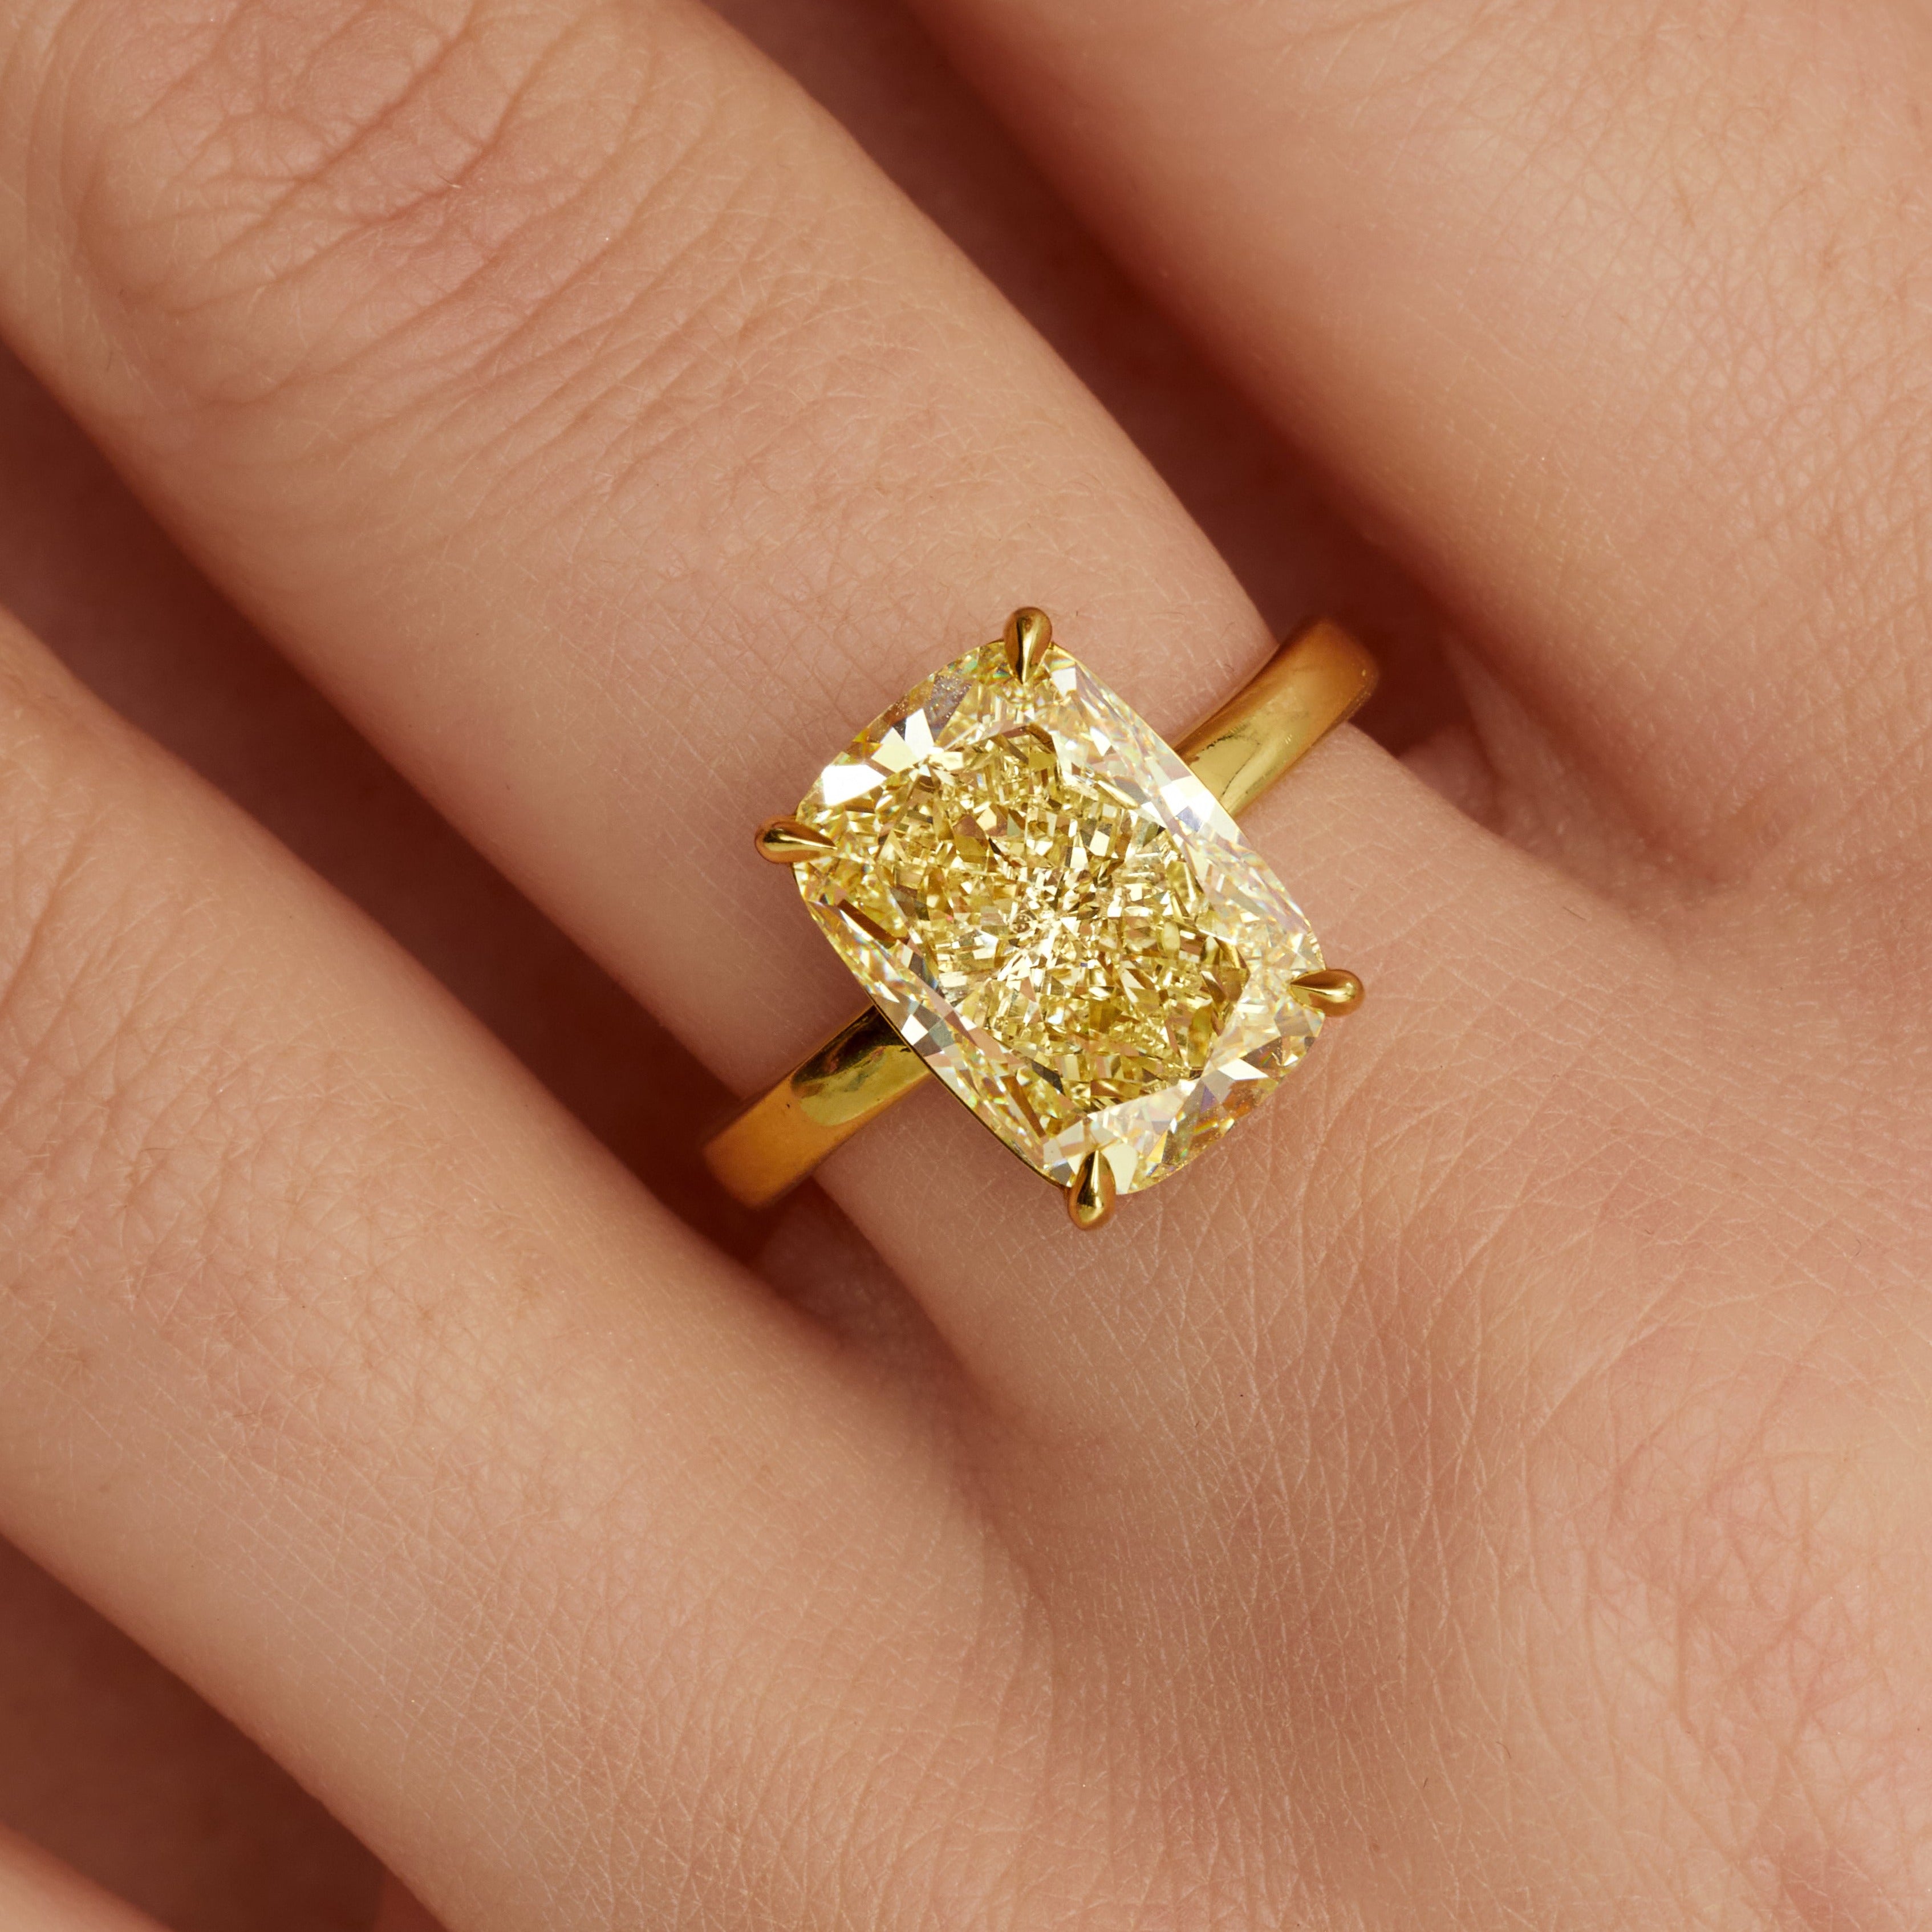 Cushion Cut Fancy Light Yellow Diamond Solitaire Ring in 18 Karat Yellow Gold